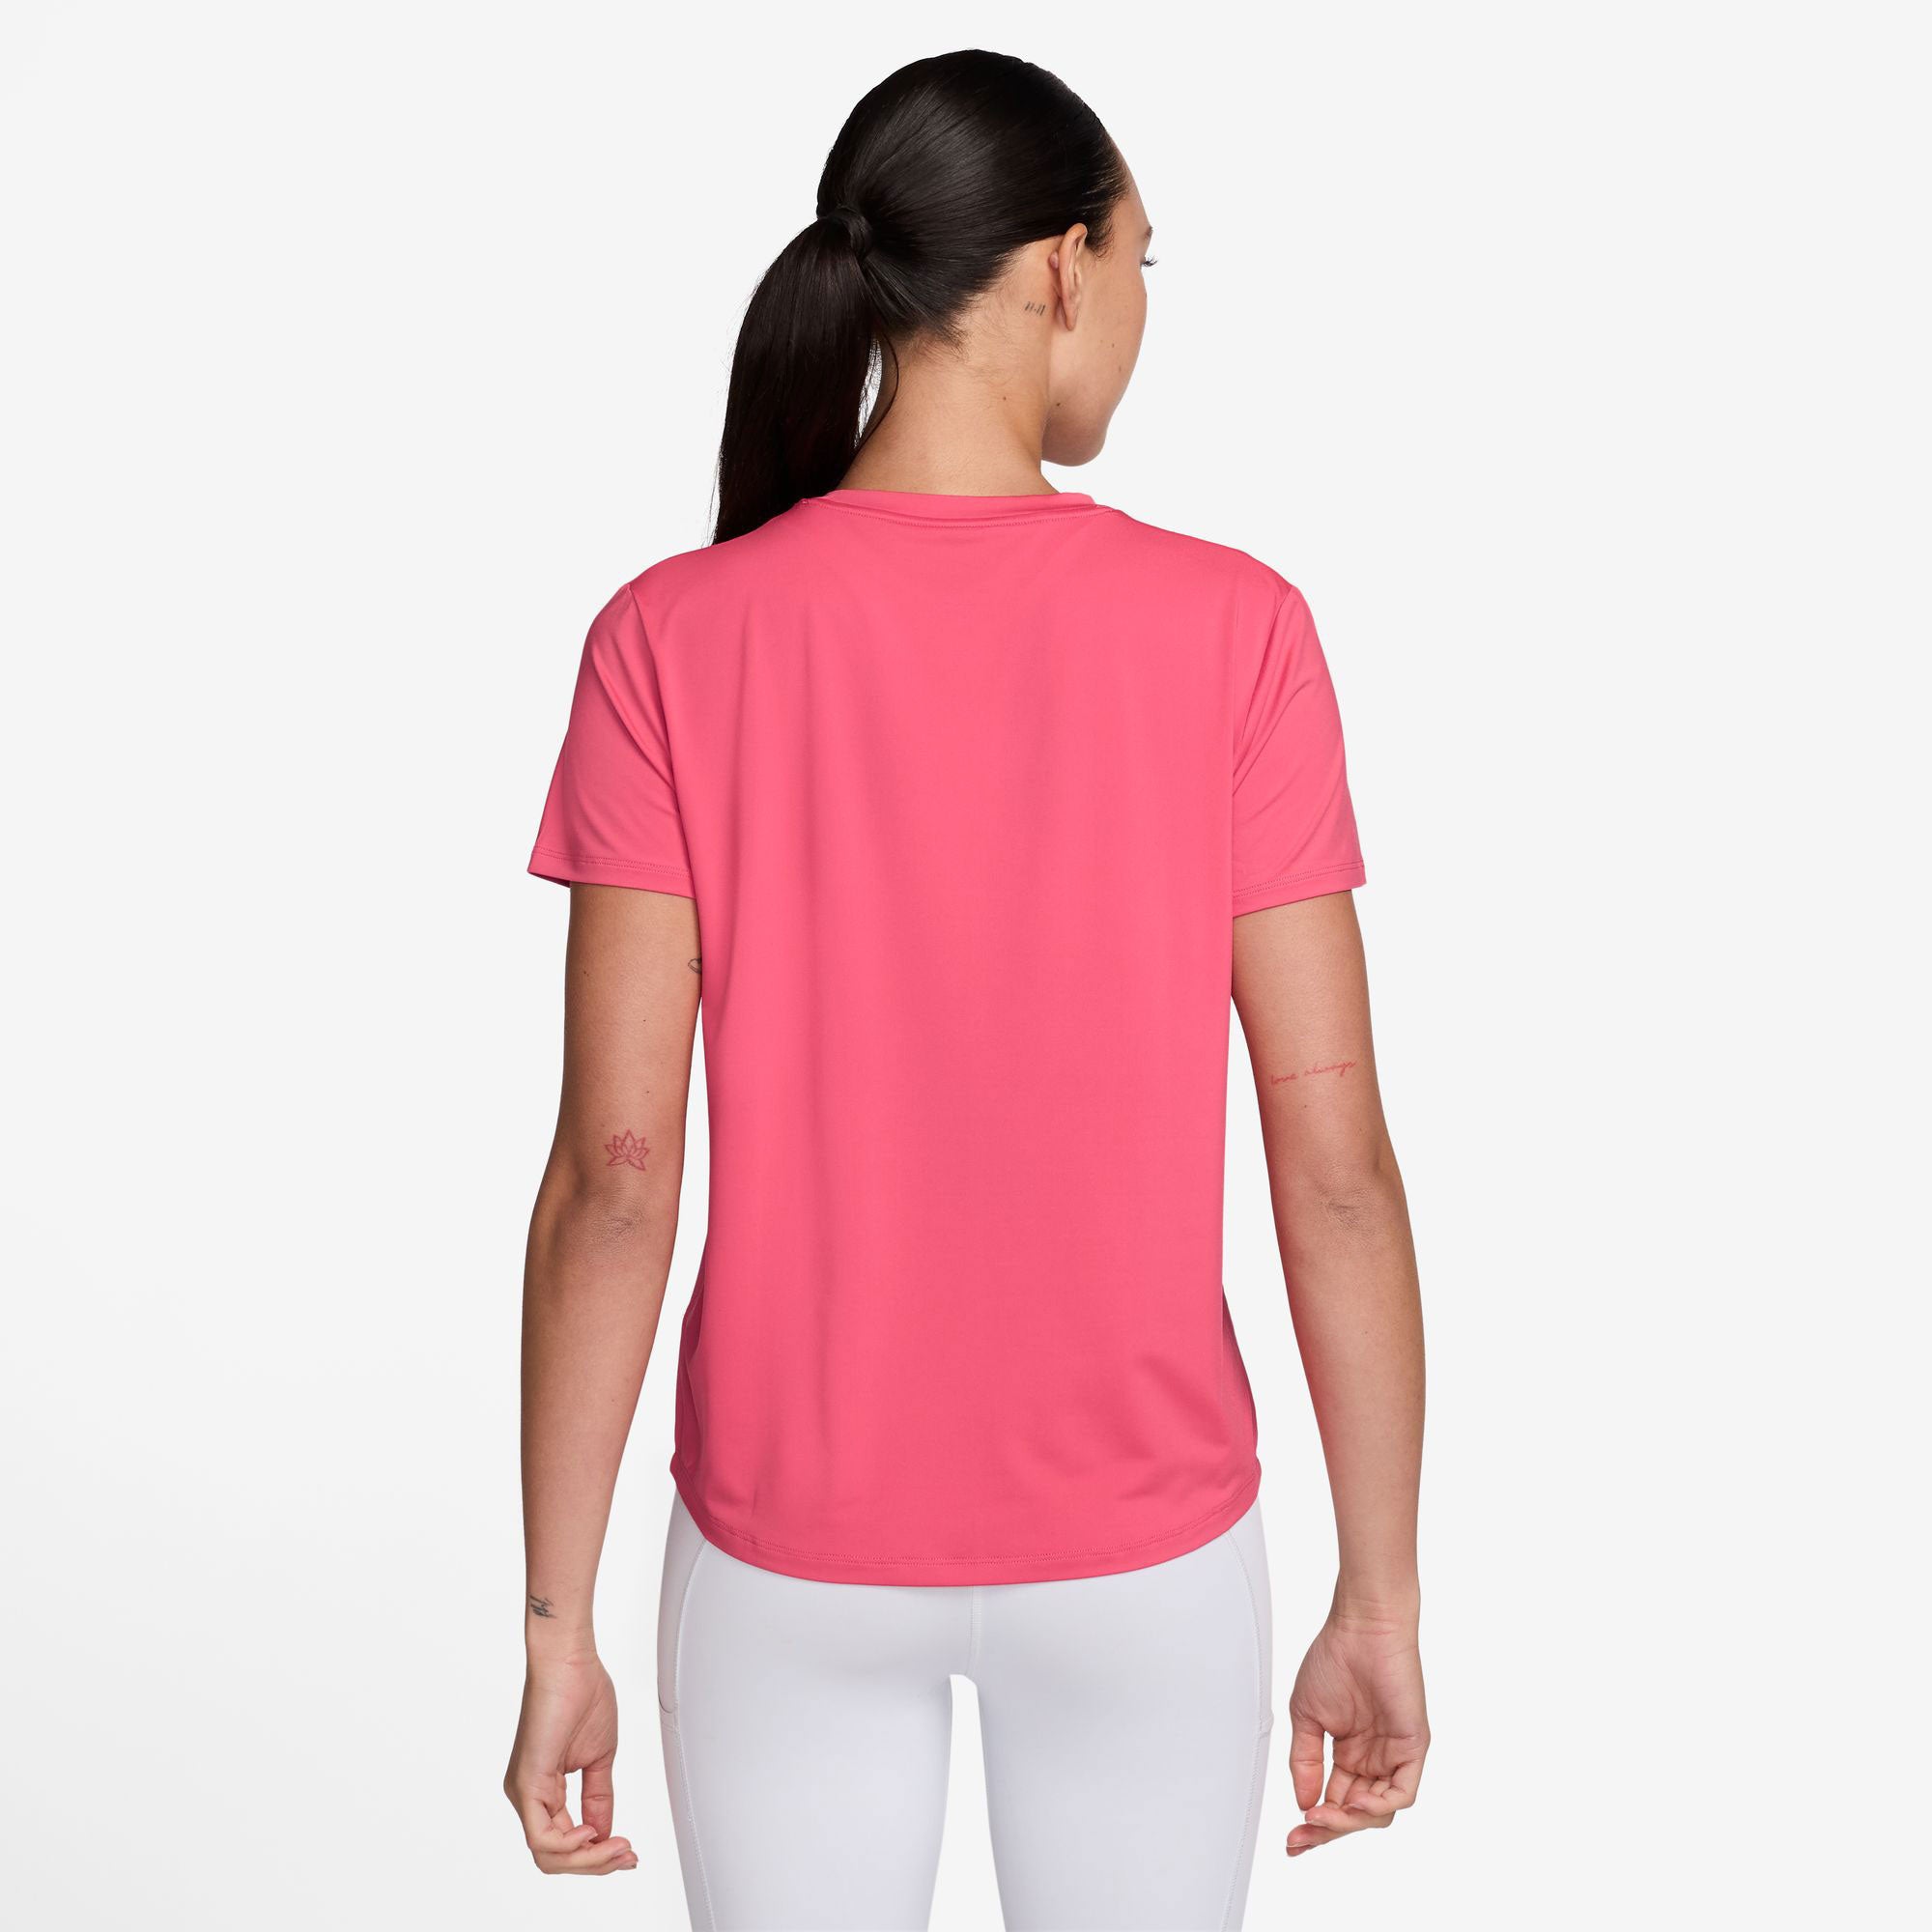 Nike One Classic Women's Dri-FIT Shirt - Pink (2)